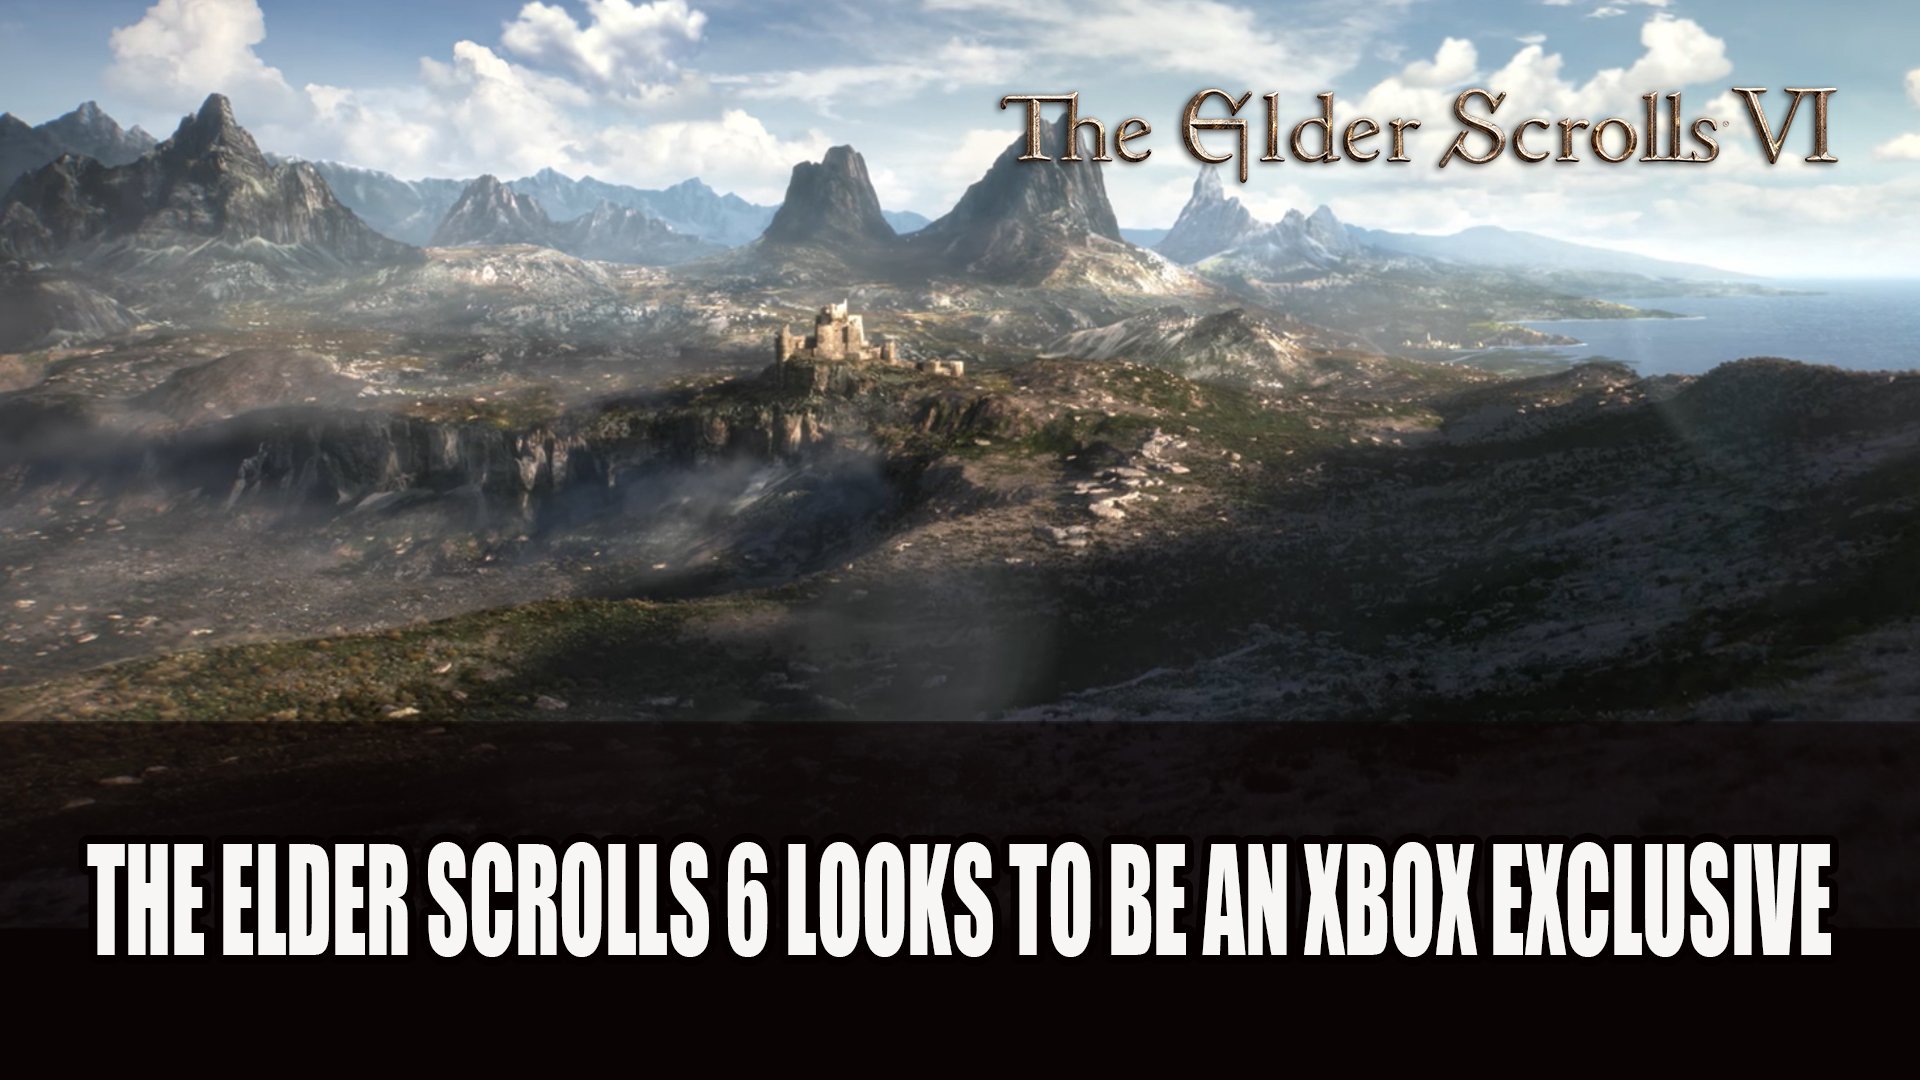 Bethesda confirms development on The Elder Scrolls 6 has started